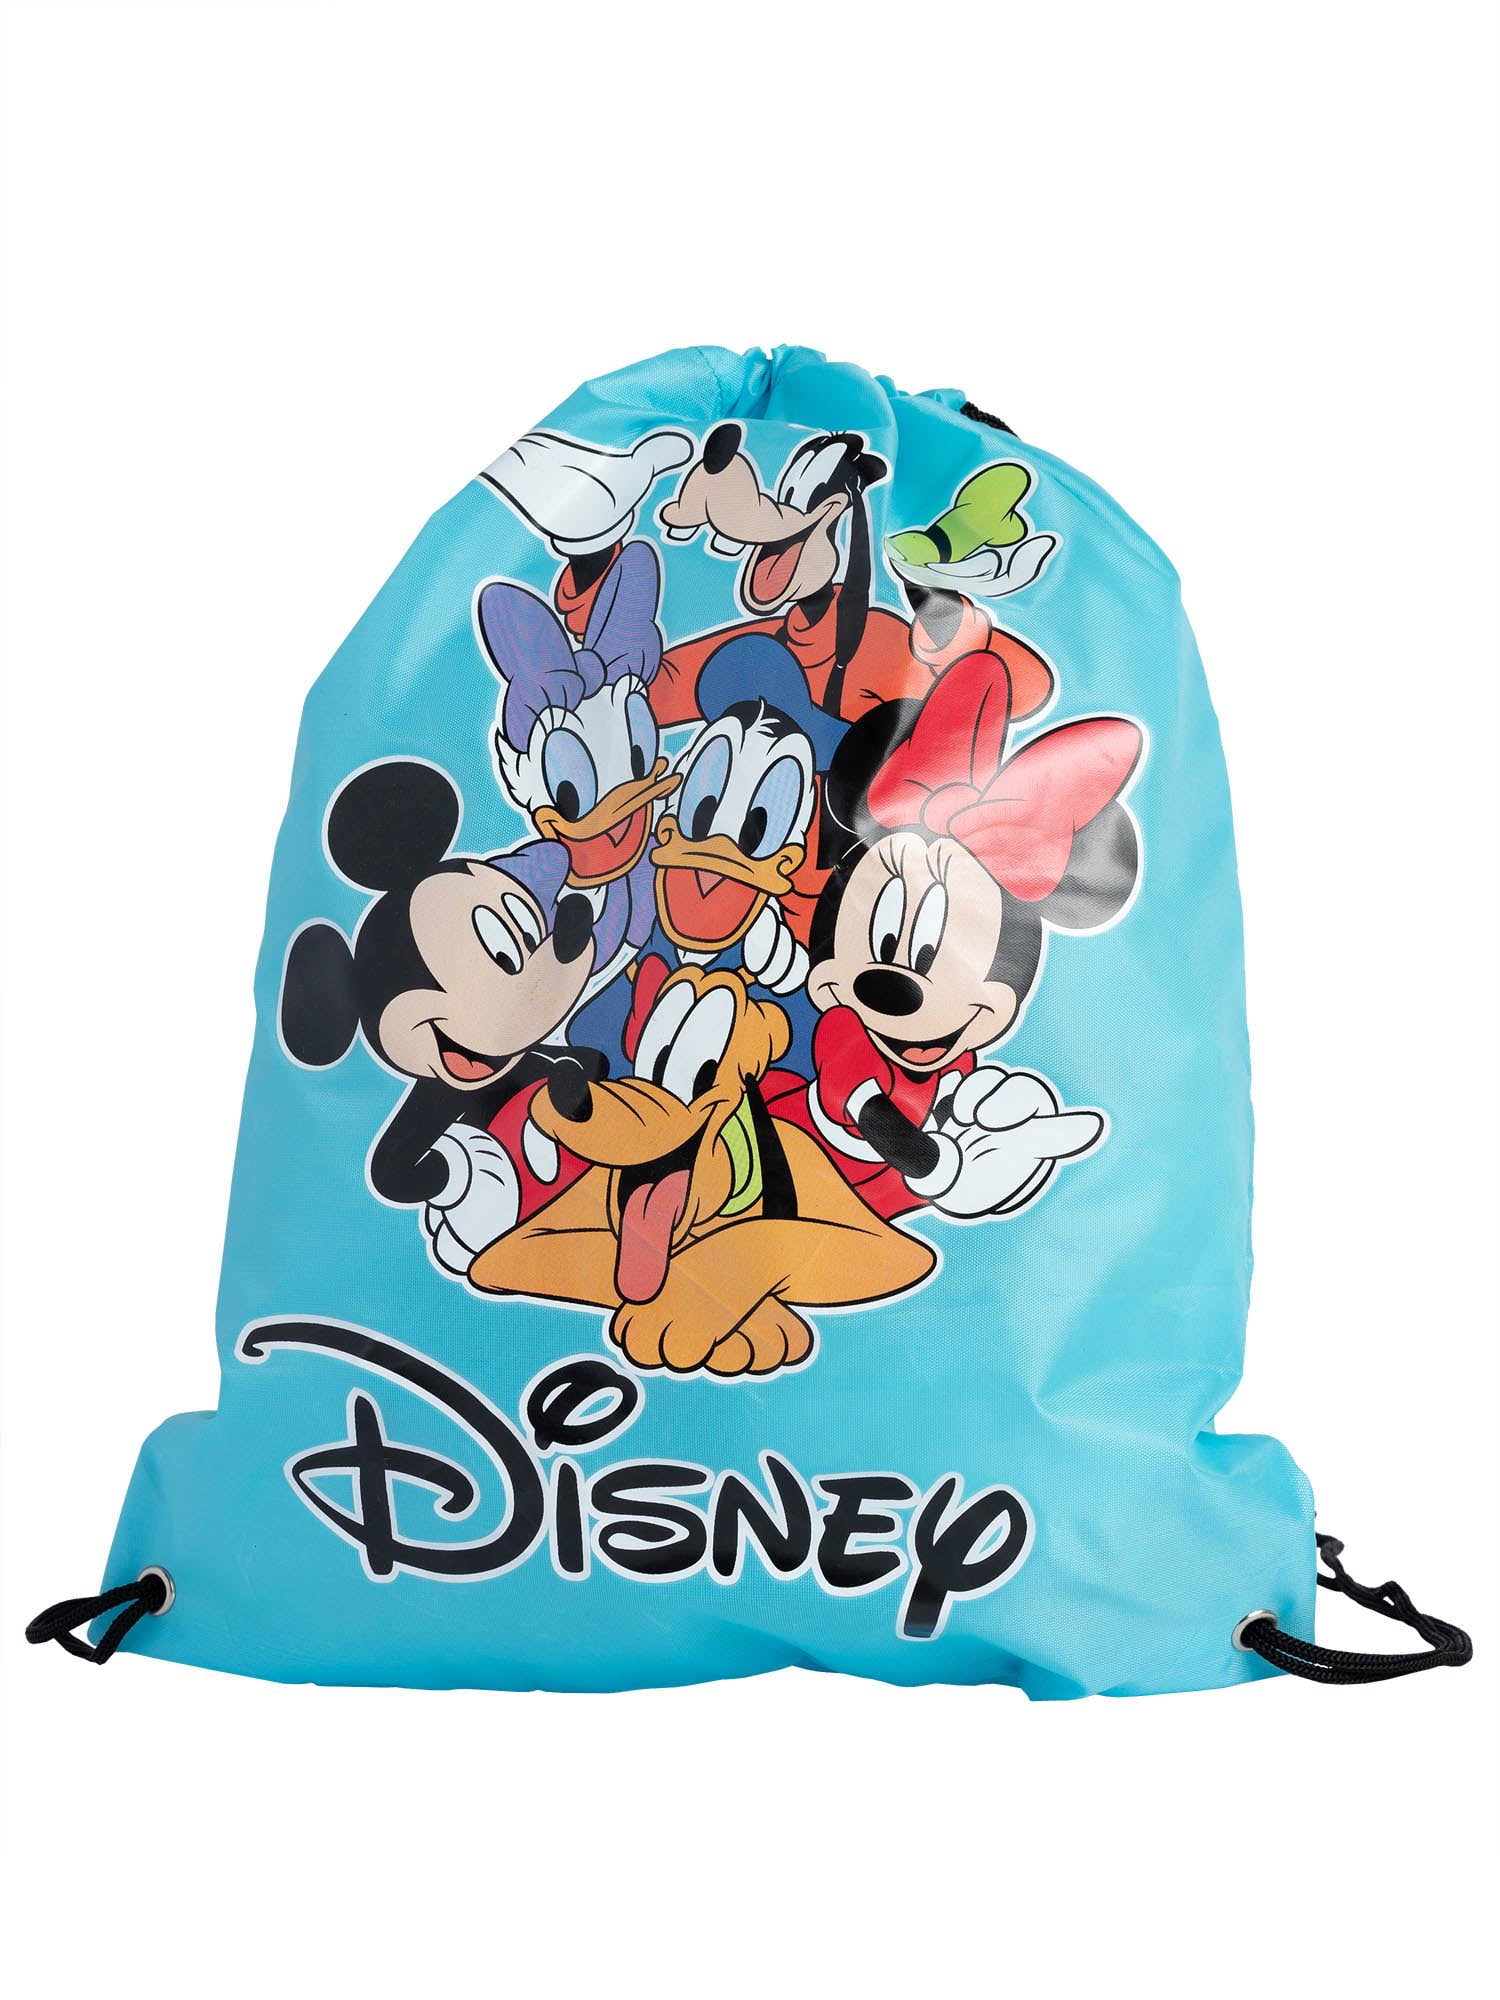 Details about   SeriaJapan Disney character drawstring bag 3 pieces set 28 x 21 cm 